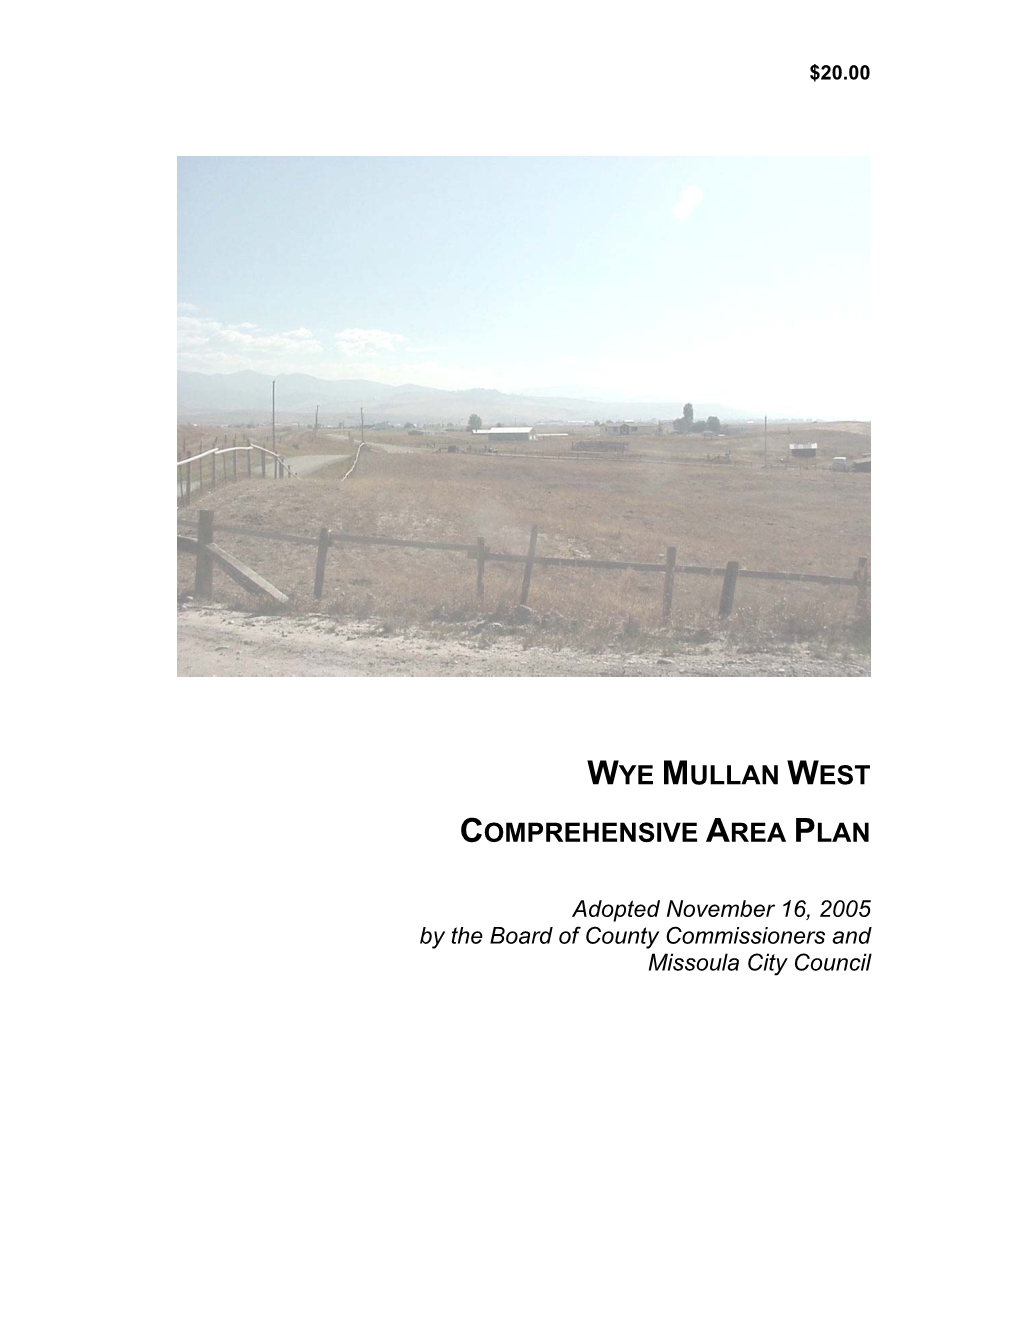 Wye Mullan West Comprehensive Area Plan Preface